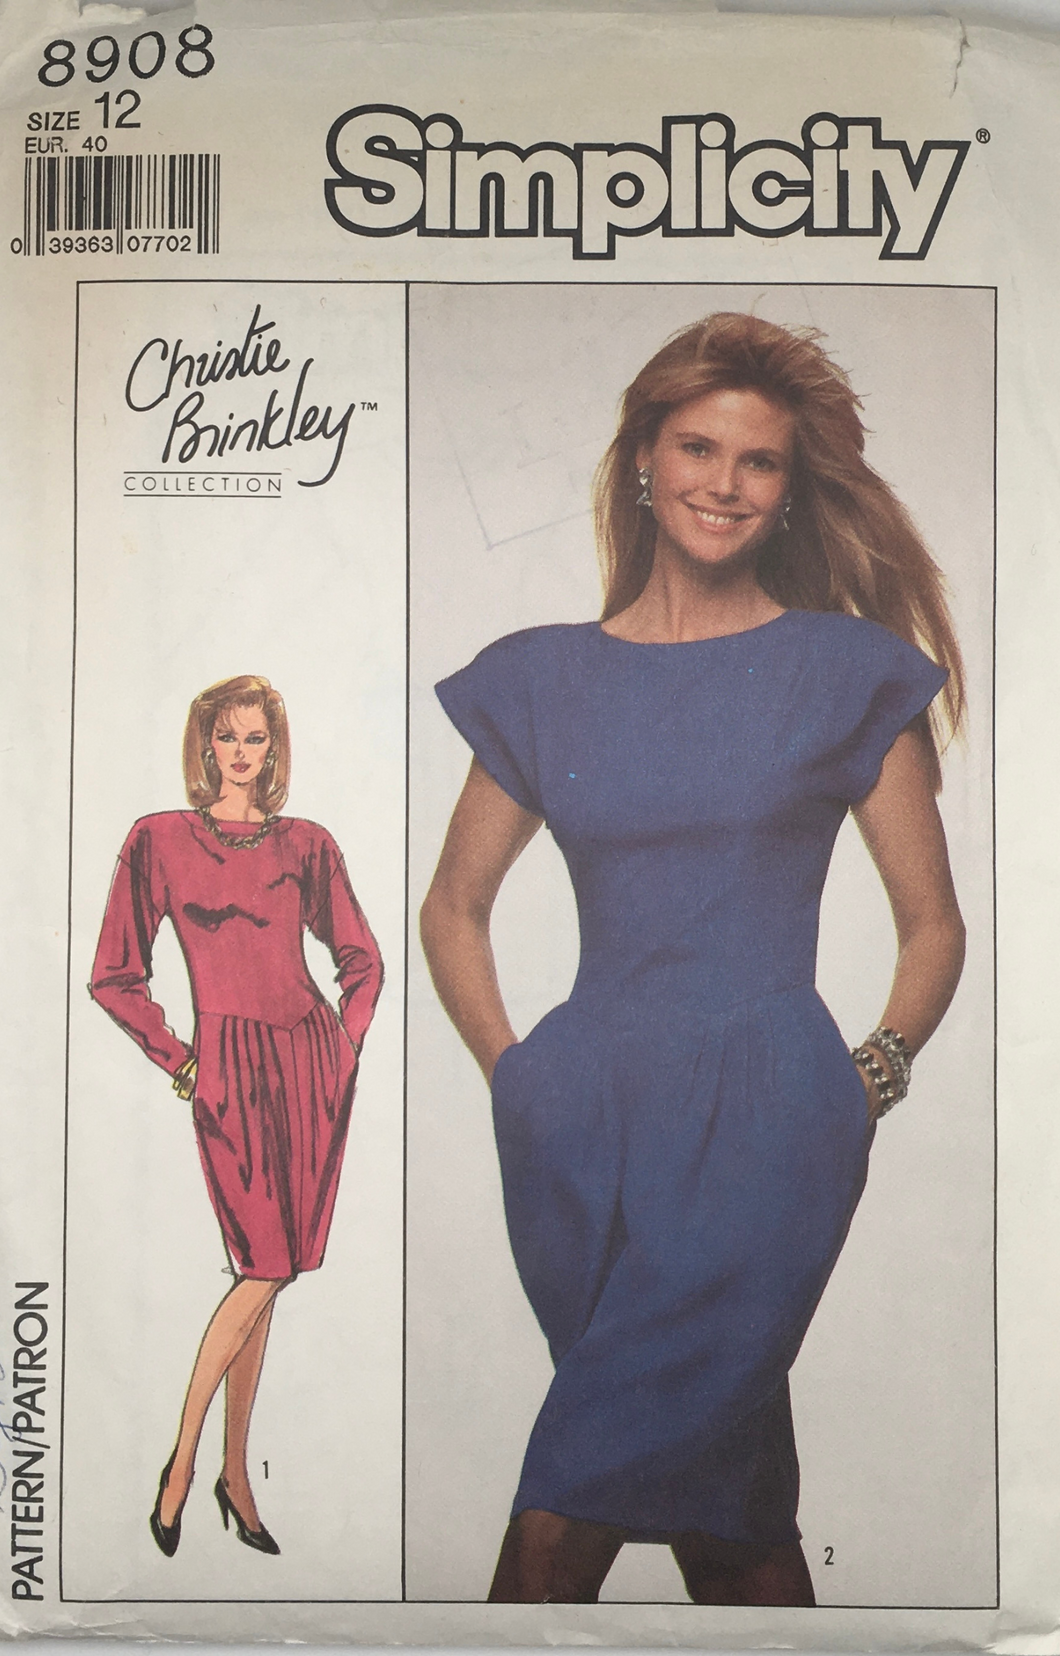 1988 Vintage Sewing Pattern: Simplicity 8908